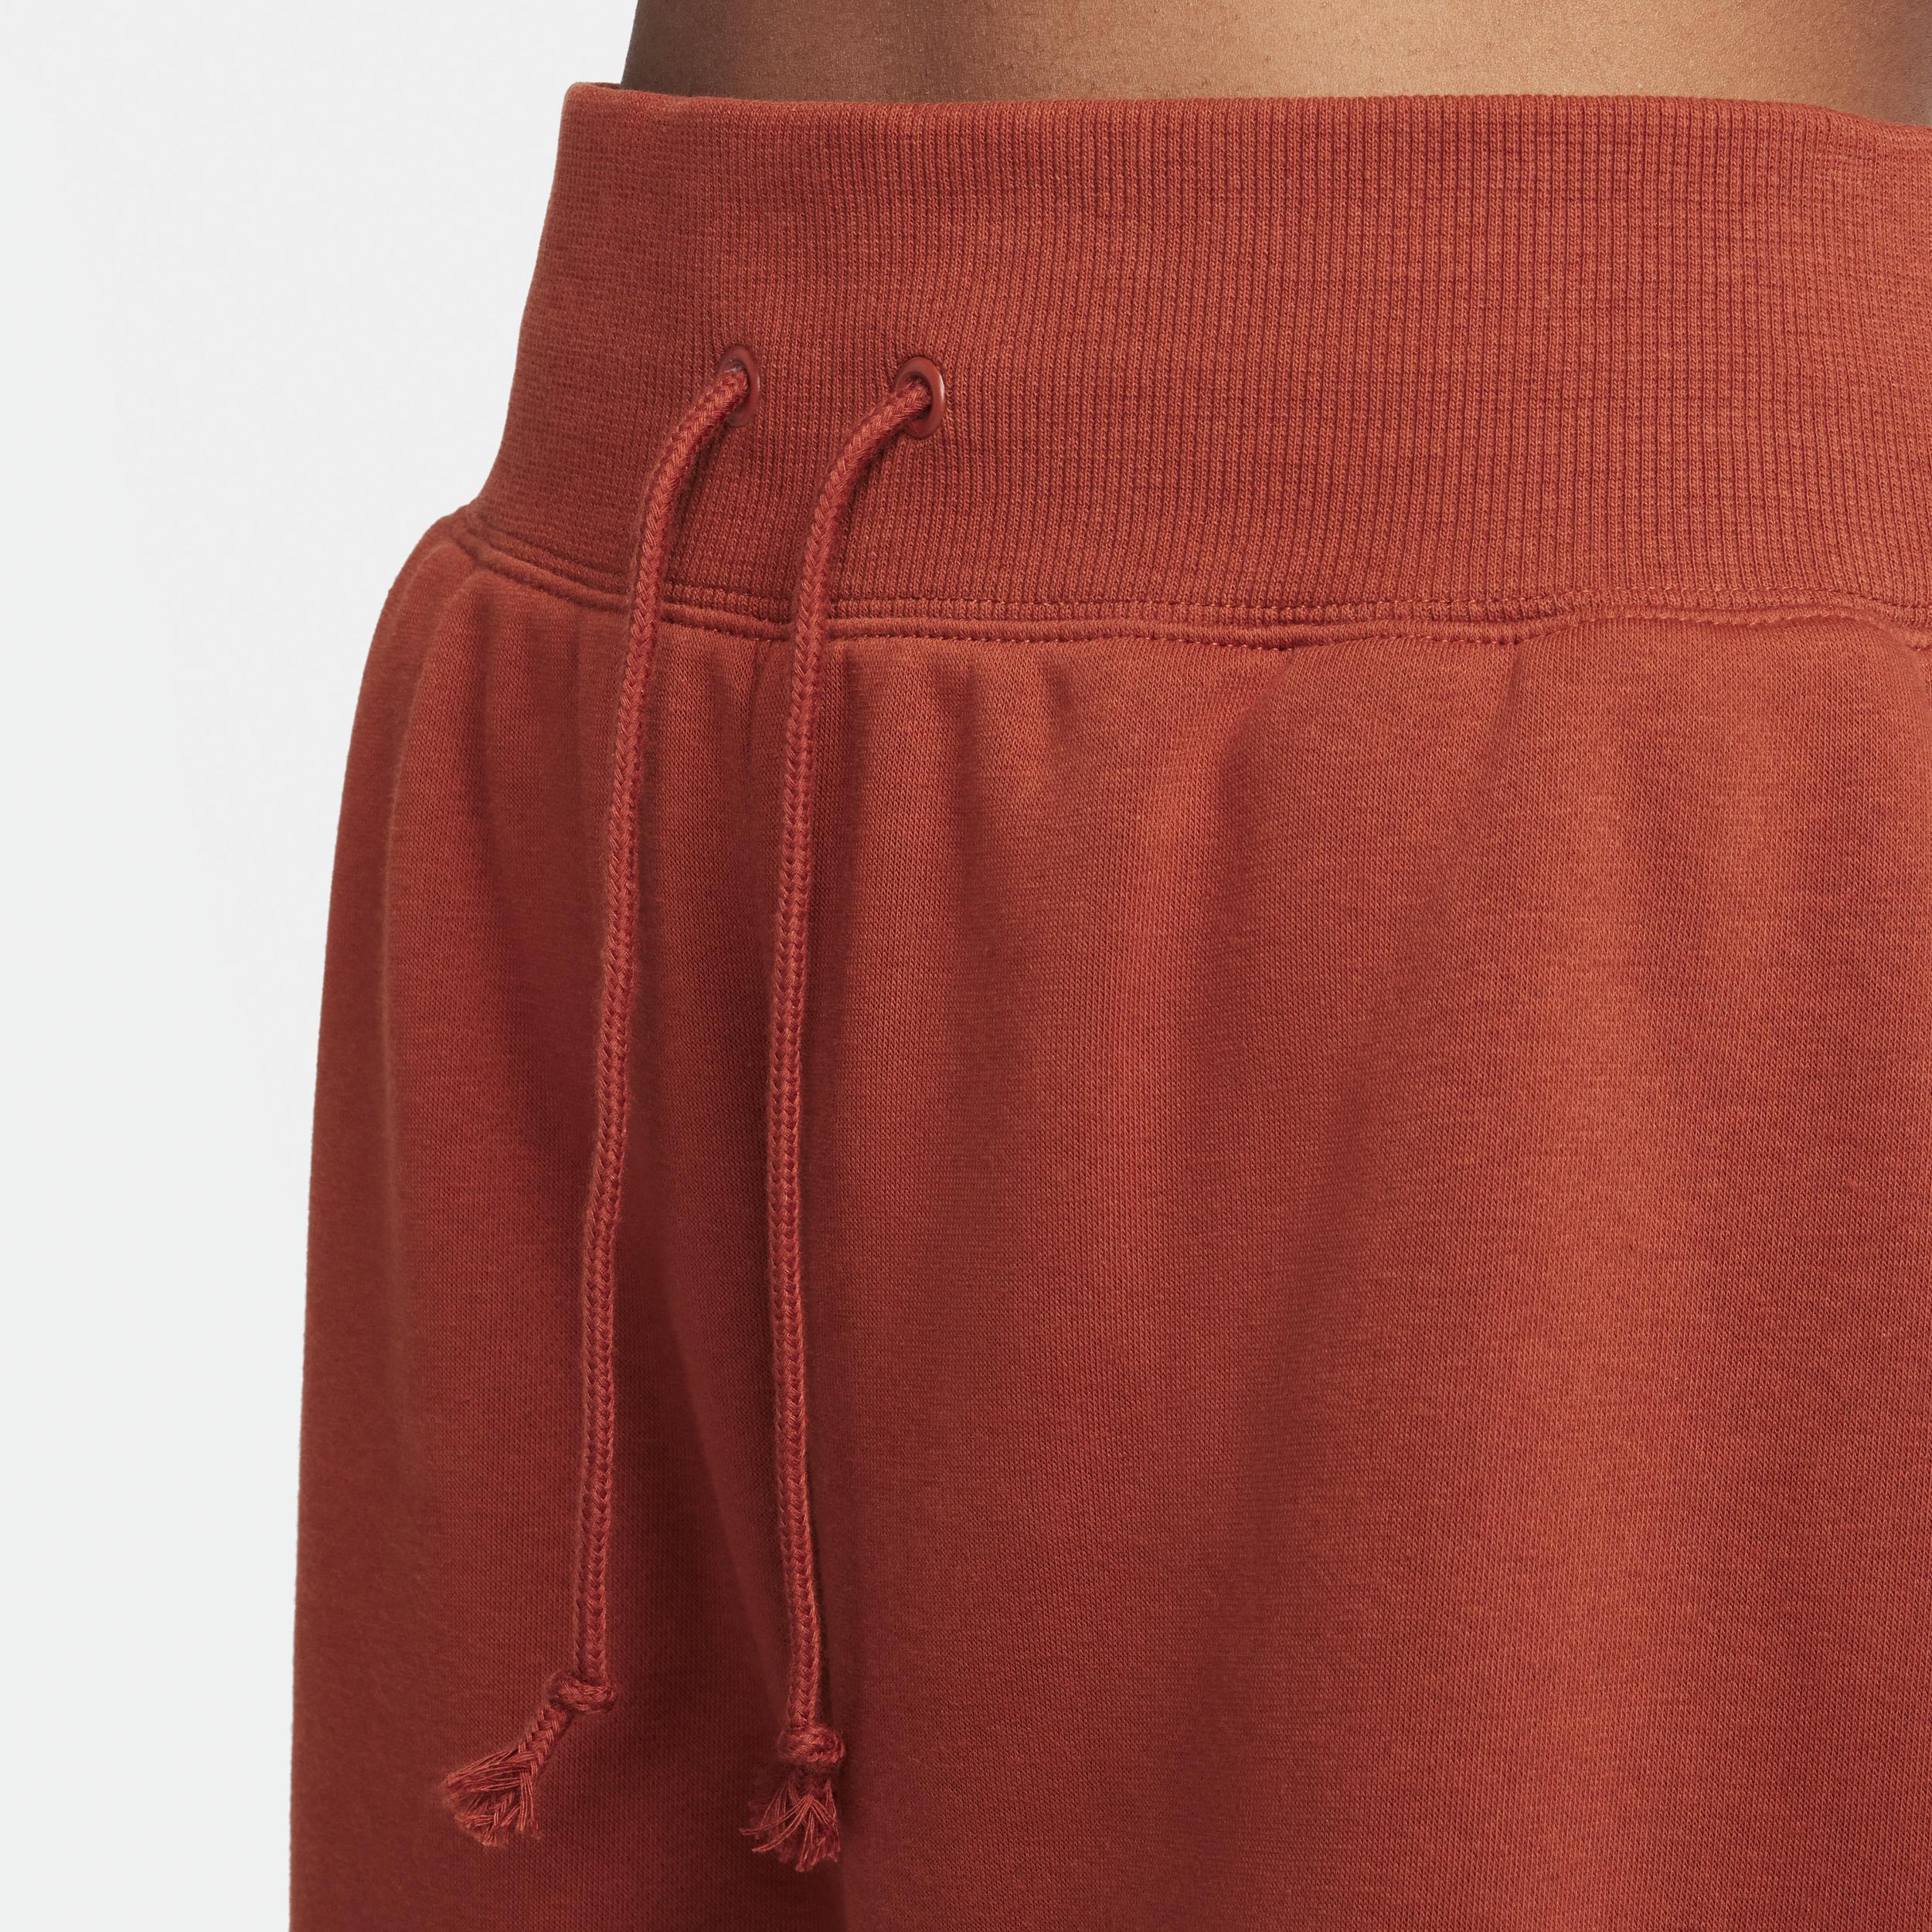 Women's Nike Sportswear Phoenix Fleece High-Waisted Oversized Sweatpants Product Image